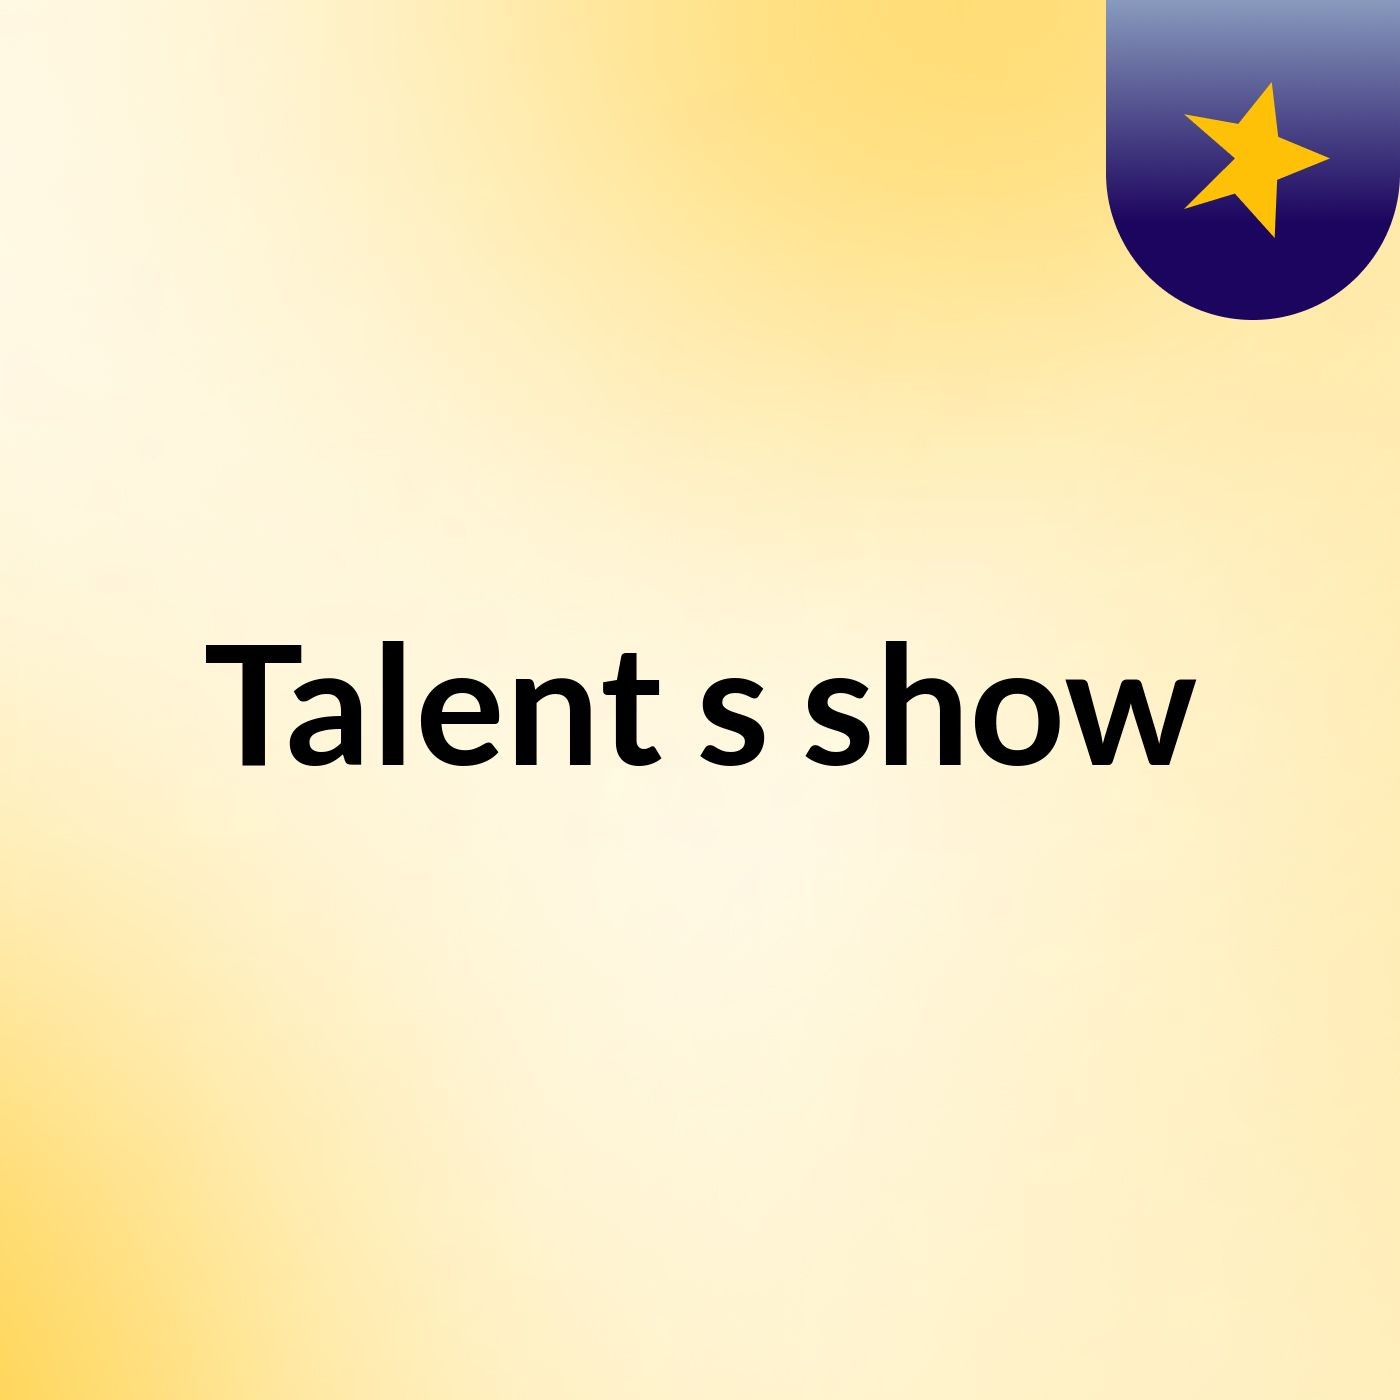 Talent's show